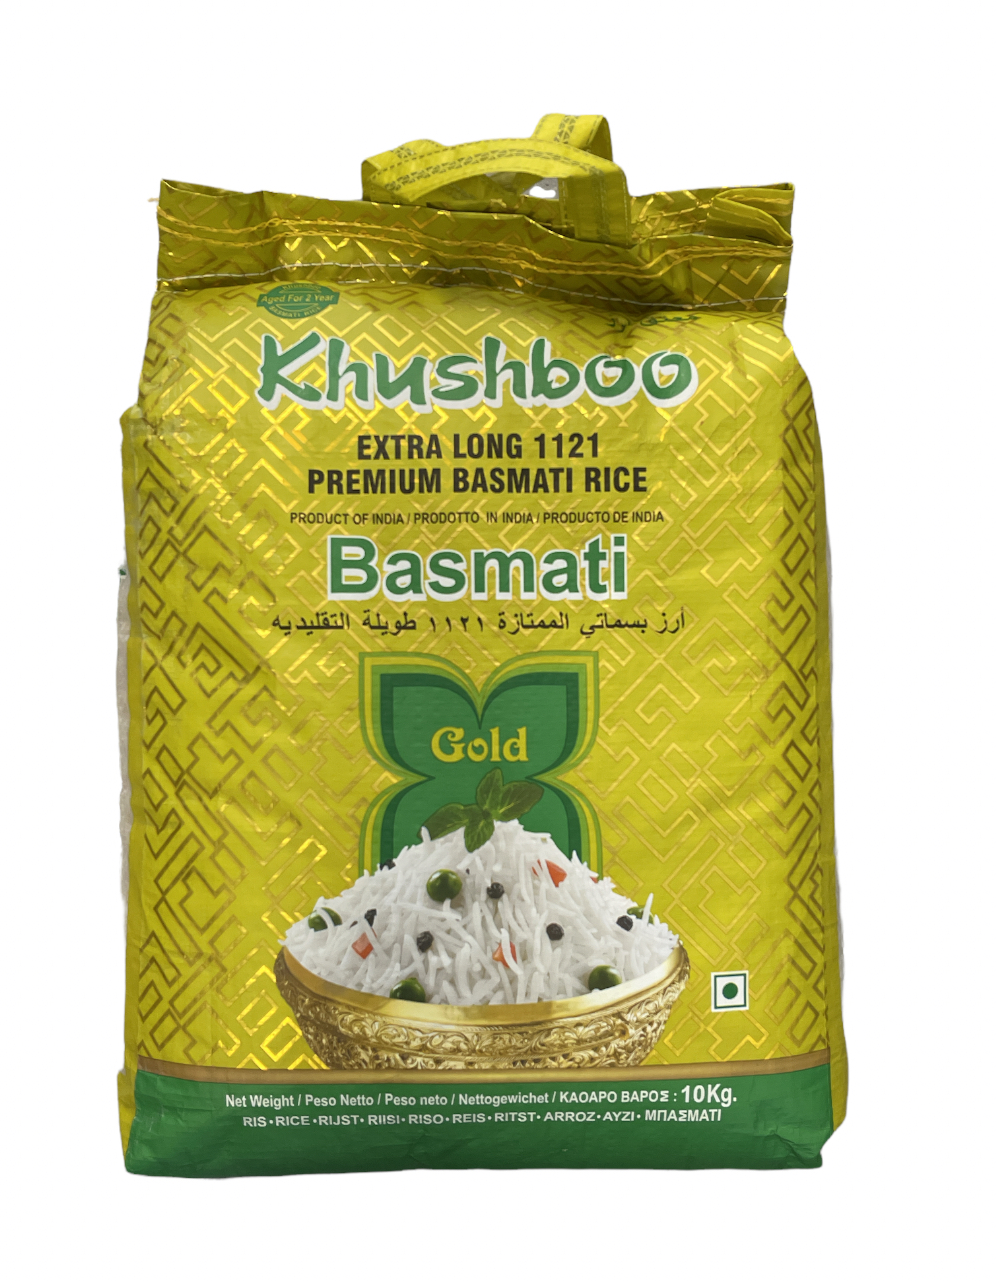 Khushboo Extra Long 1121 Basmati Rice Gold XL 10kg